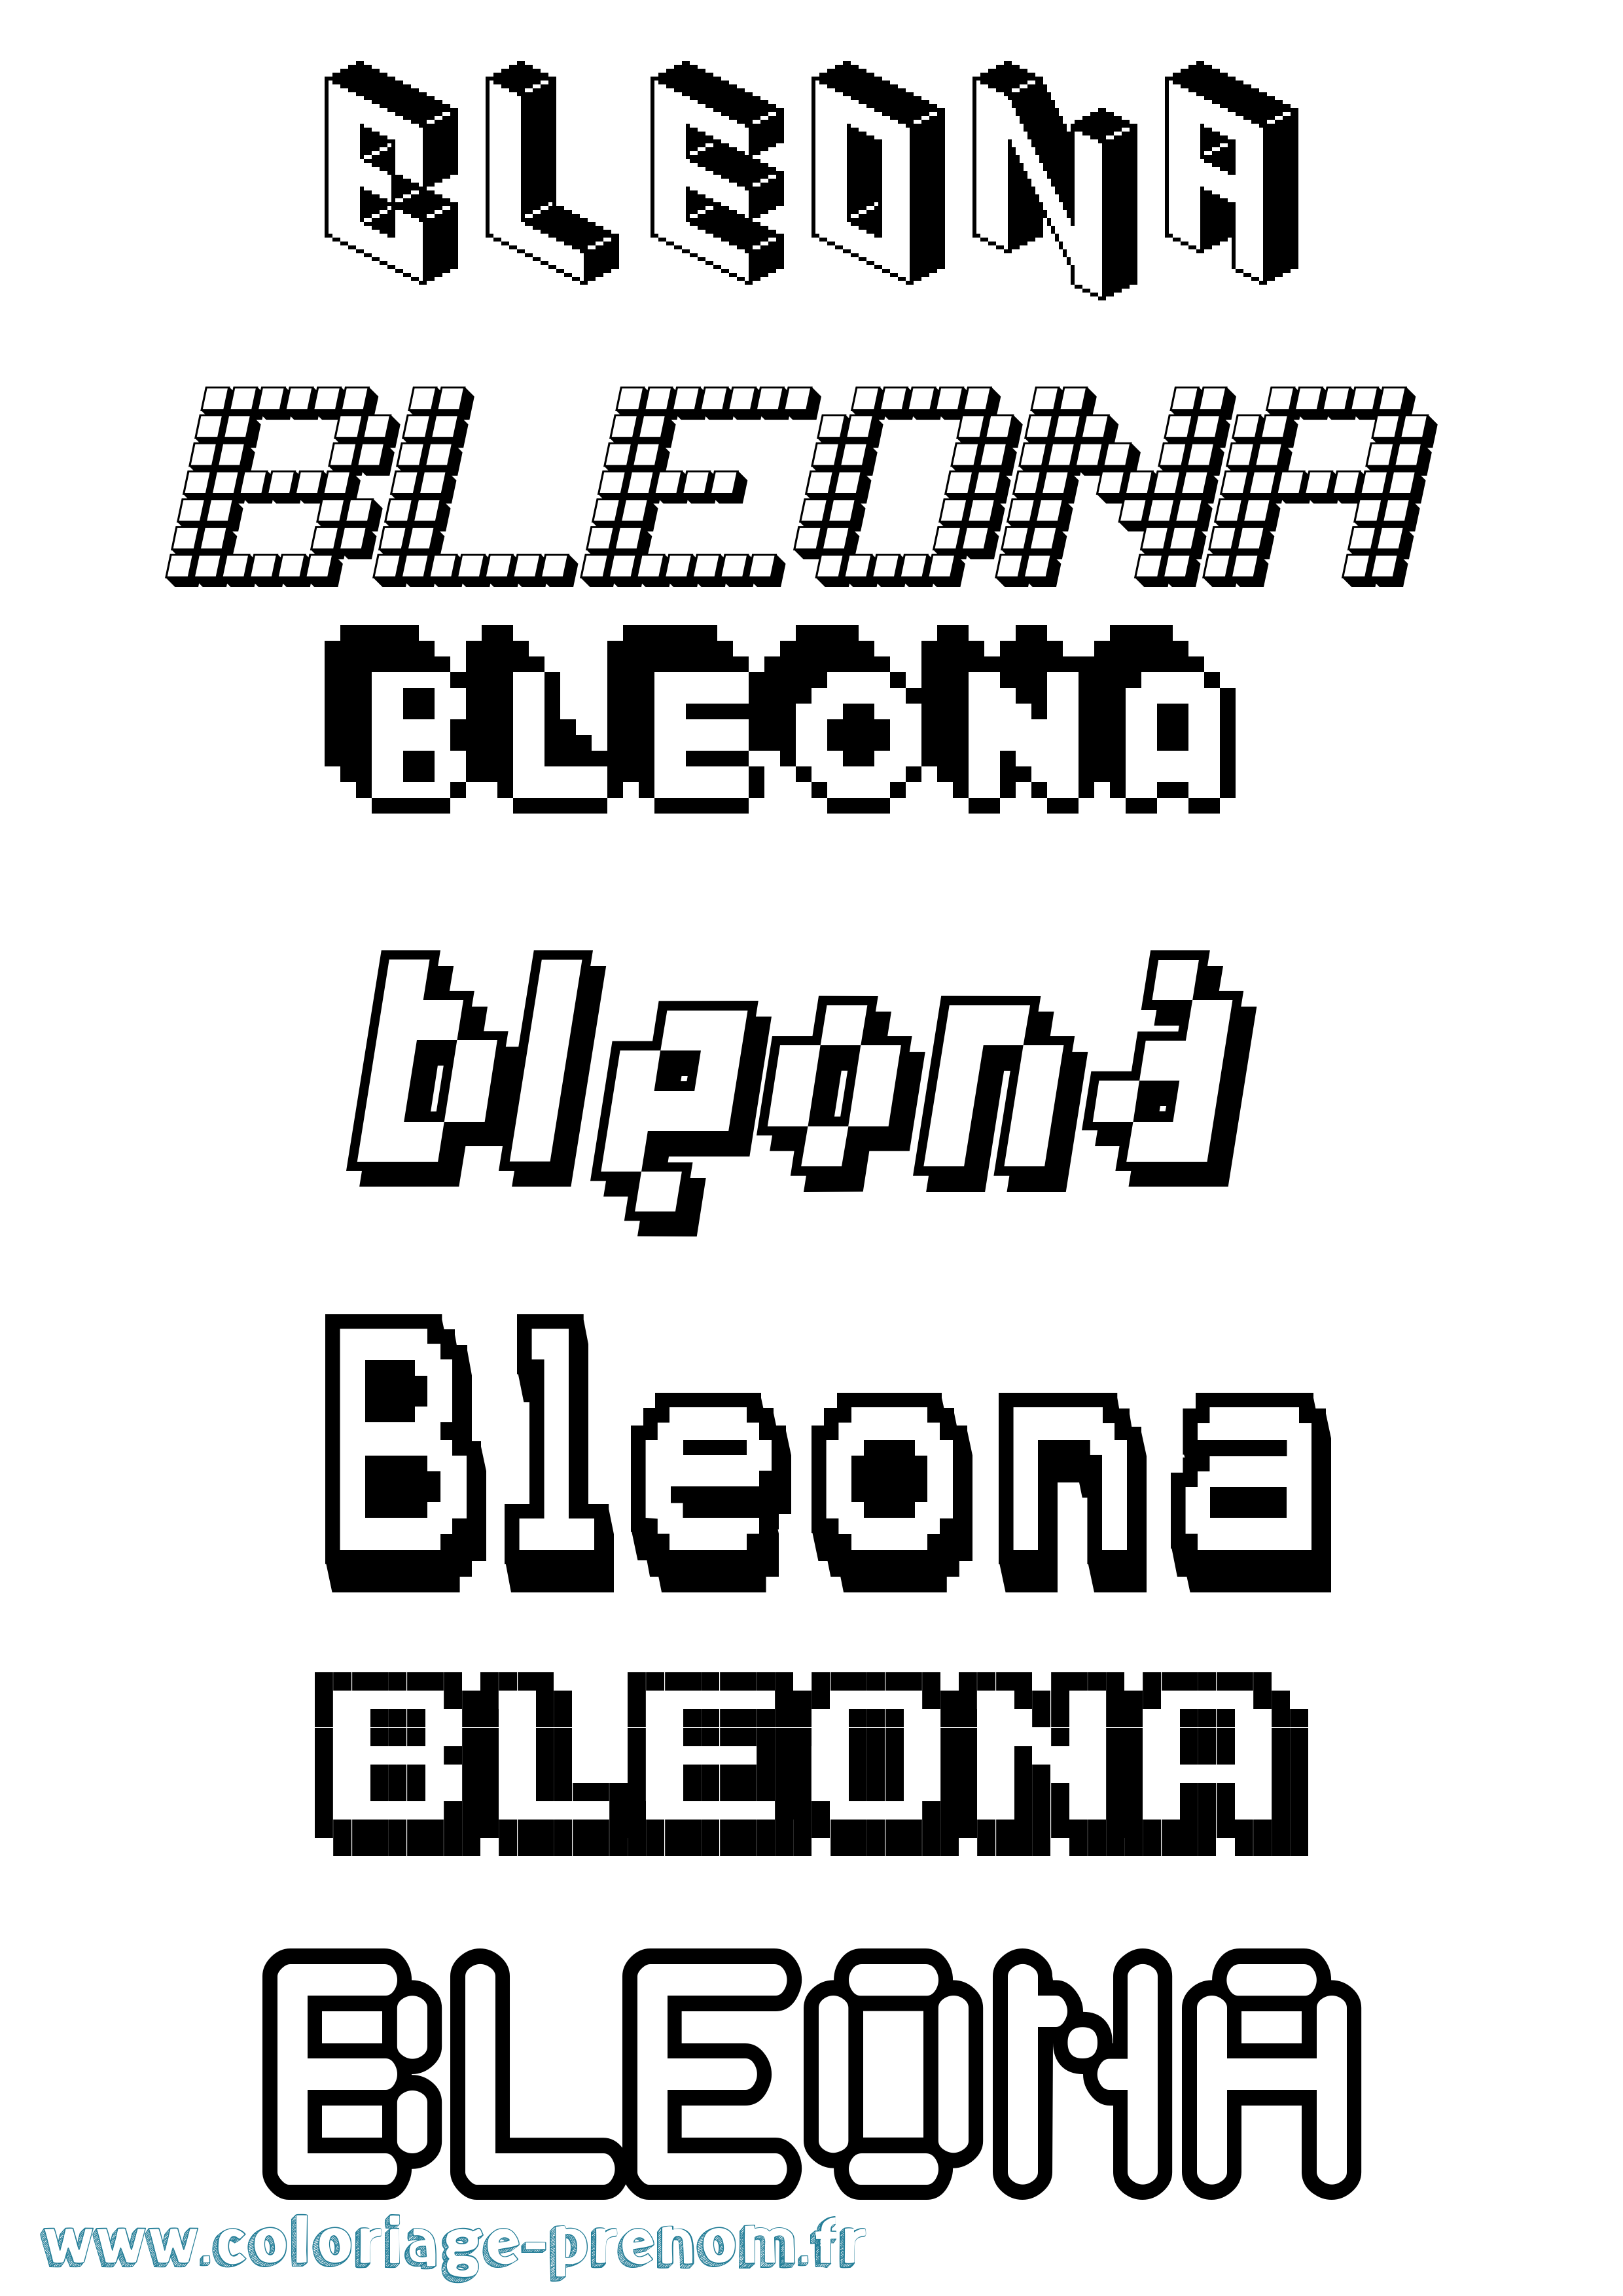 Coloriage prénom Bleona Pixel